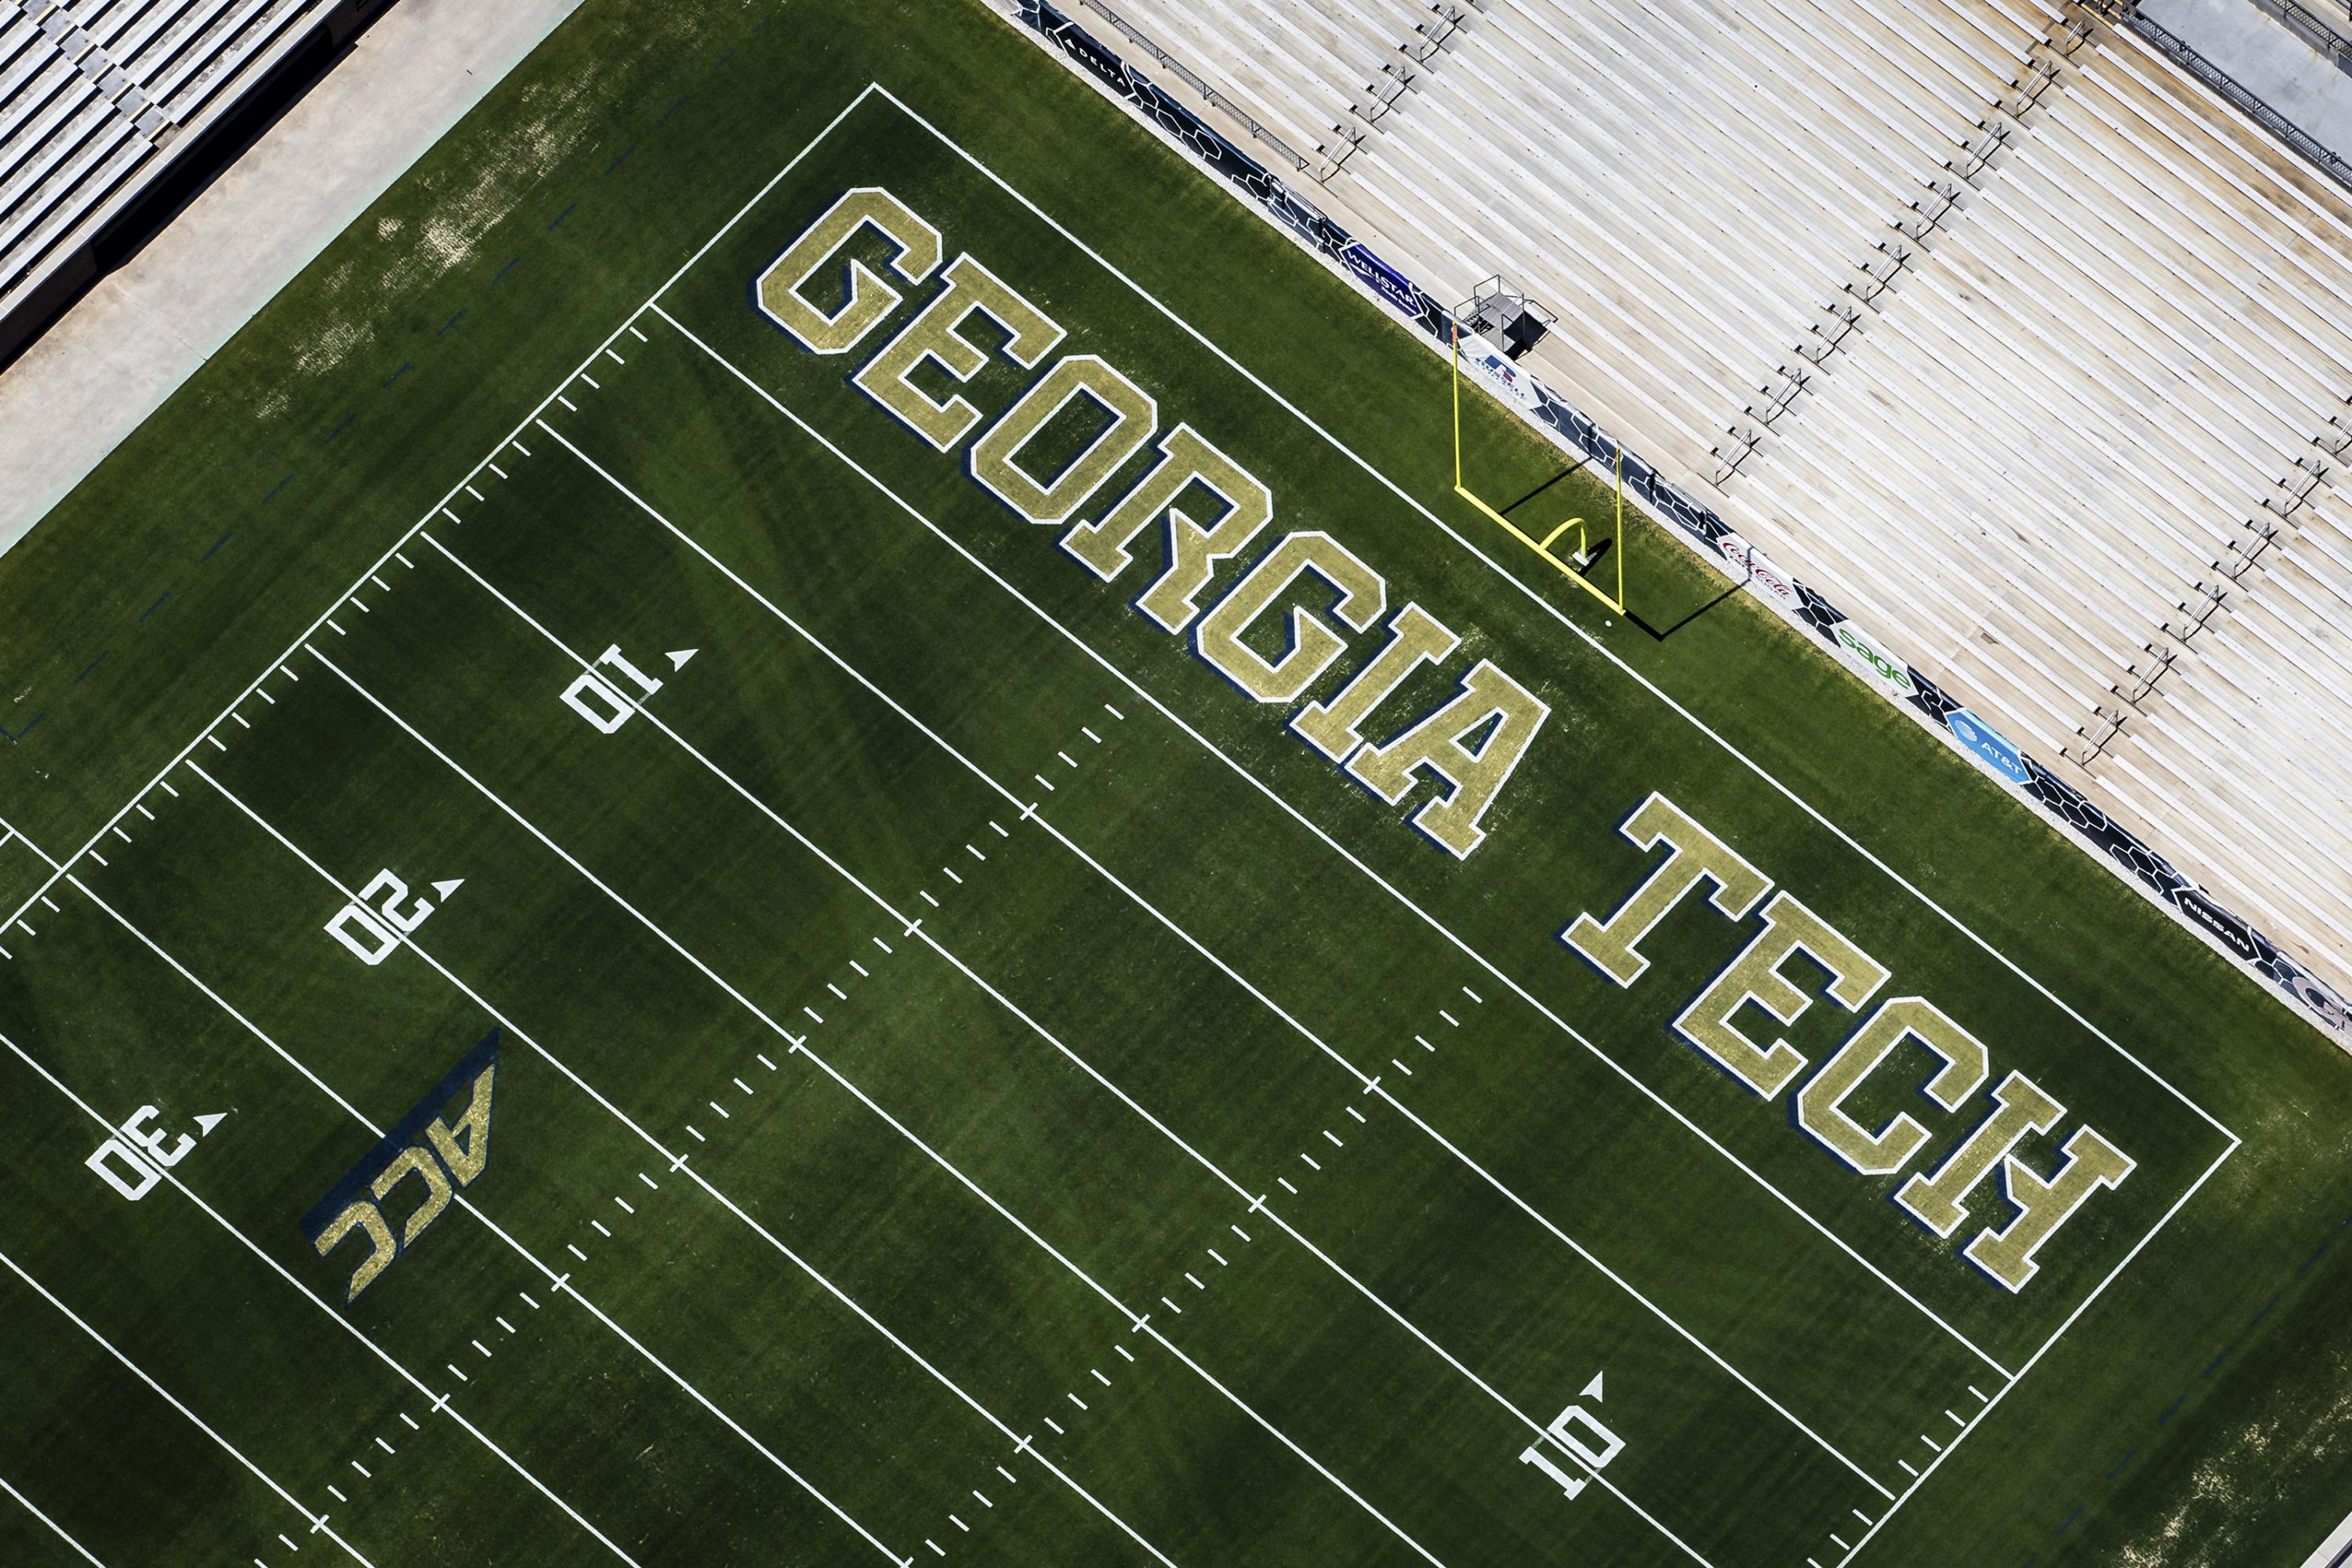 New wordmark for Georgia Tech Athletics